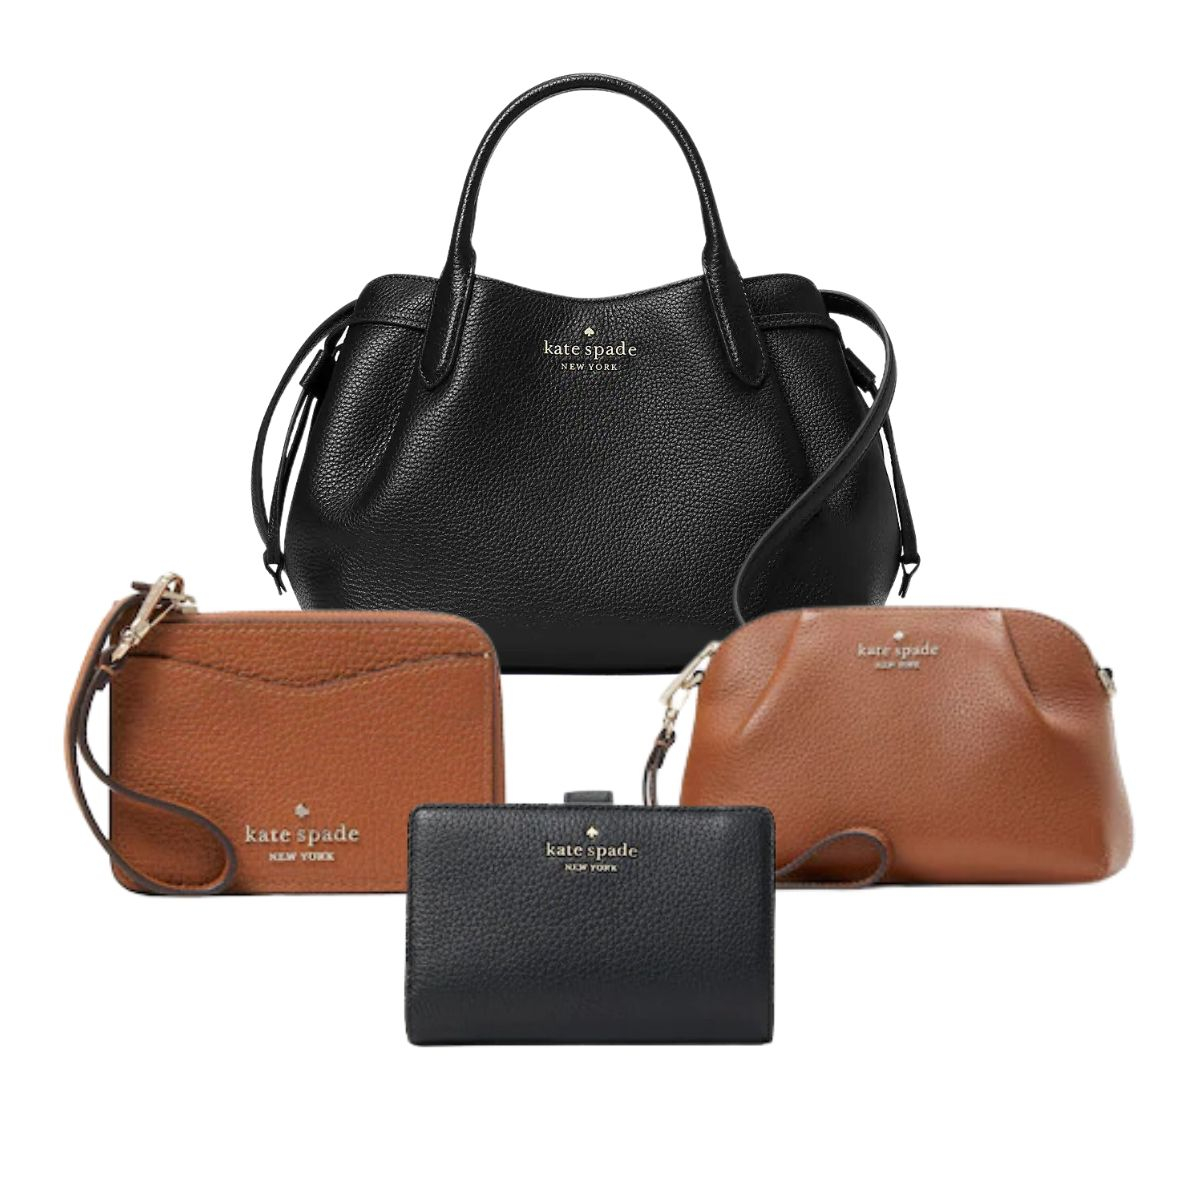 Kate Spade Surprise Leila Shoulder Bag, Deep Berry - Handbags & Purses